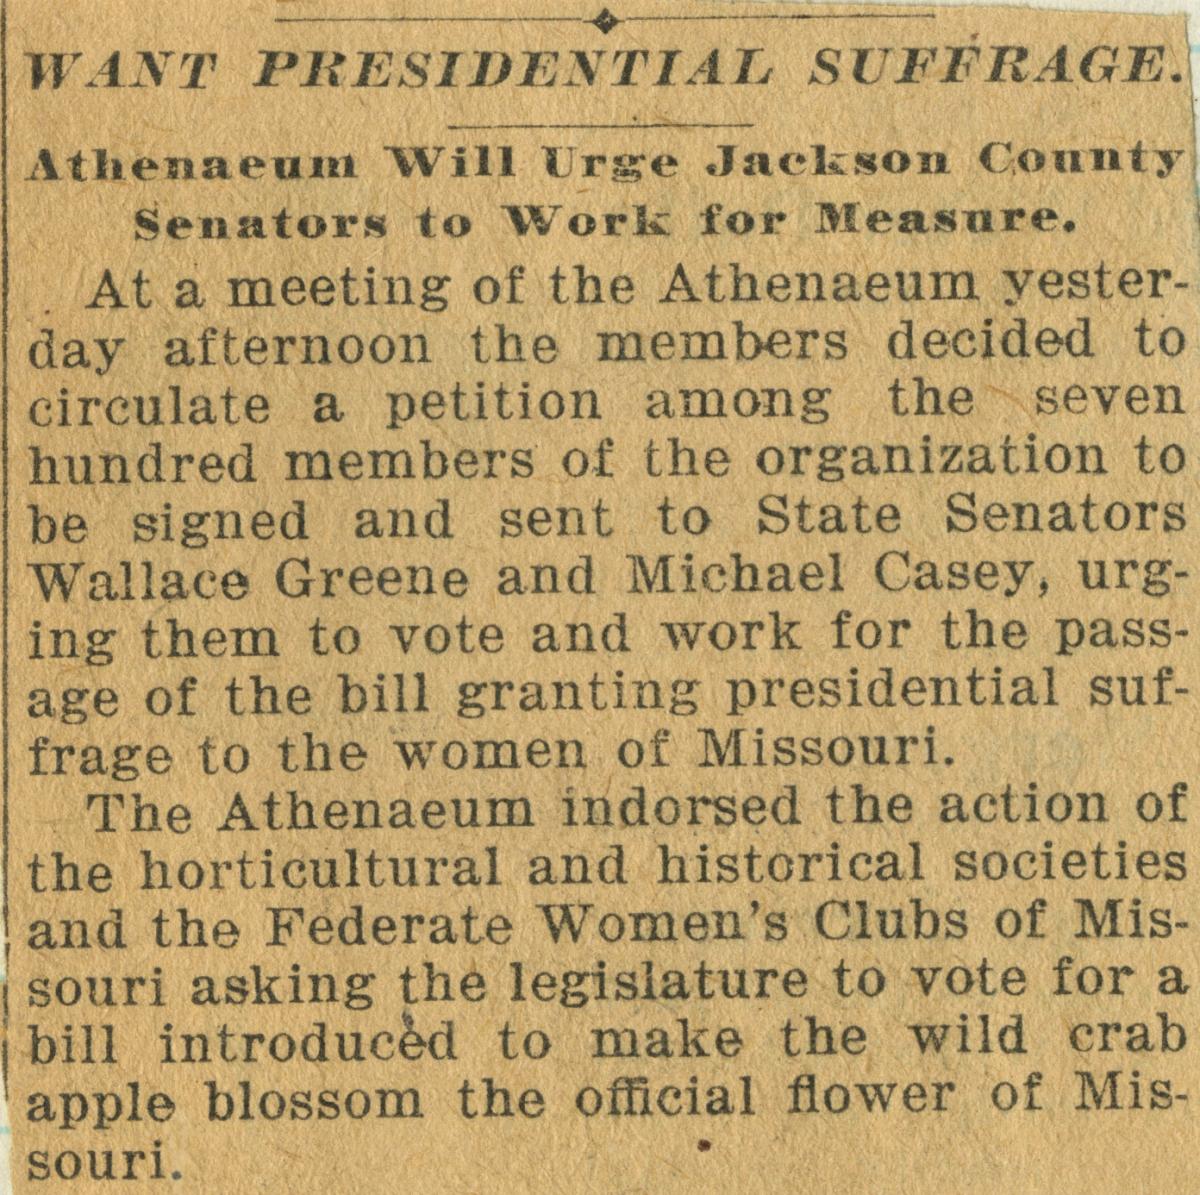 Athenaeum members urged Missouri senators to support passage of the 19th Amendment.